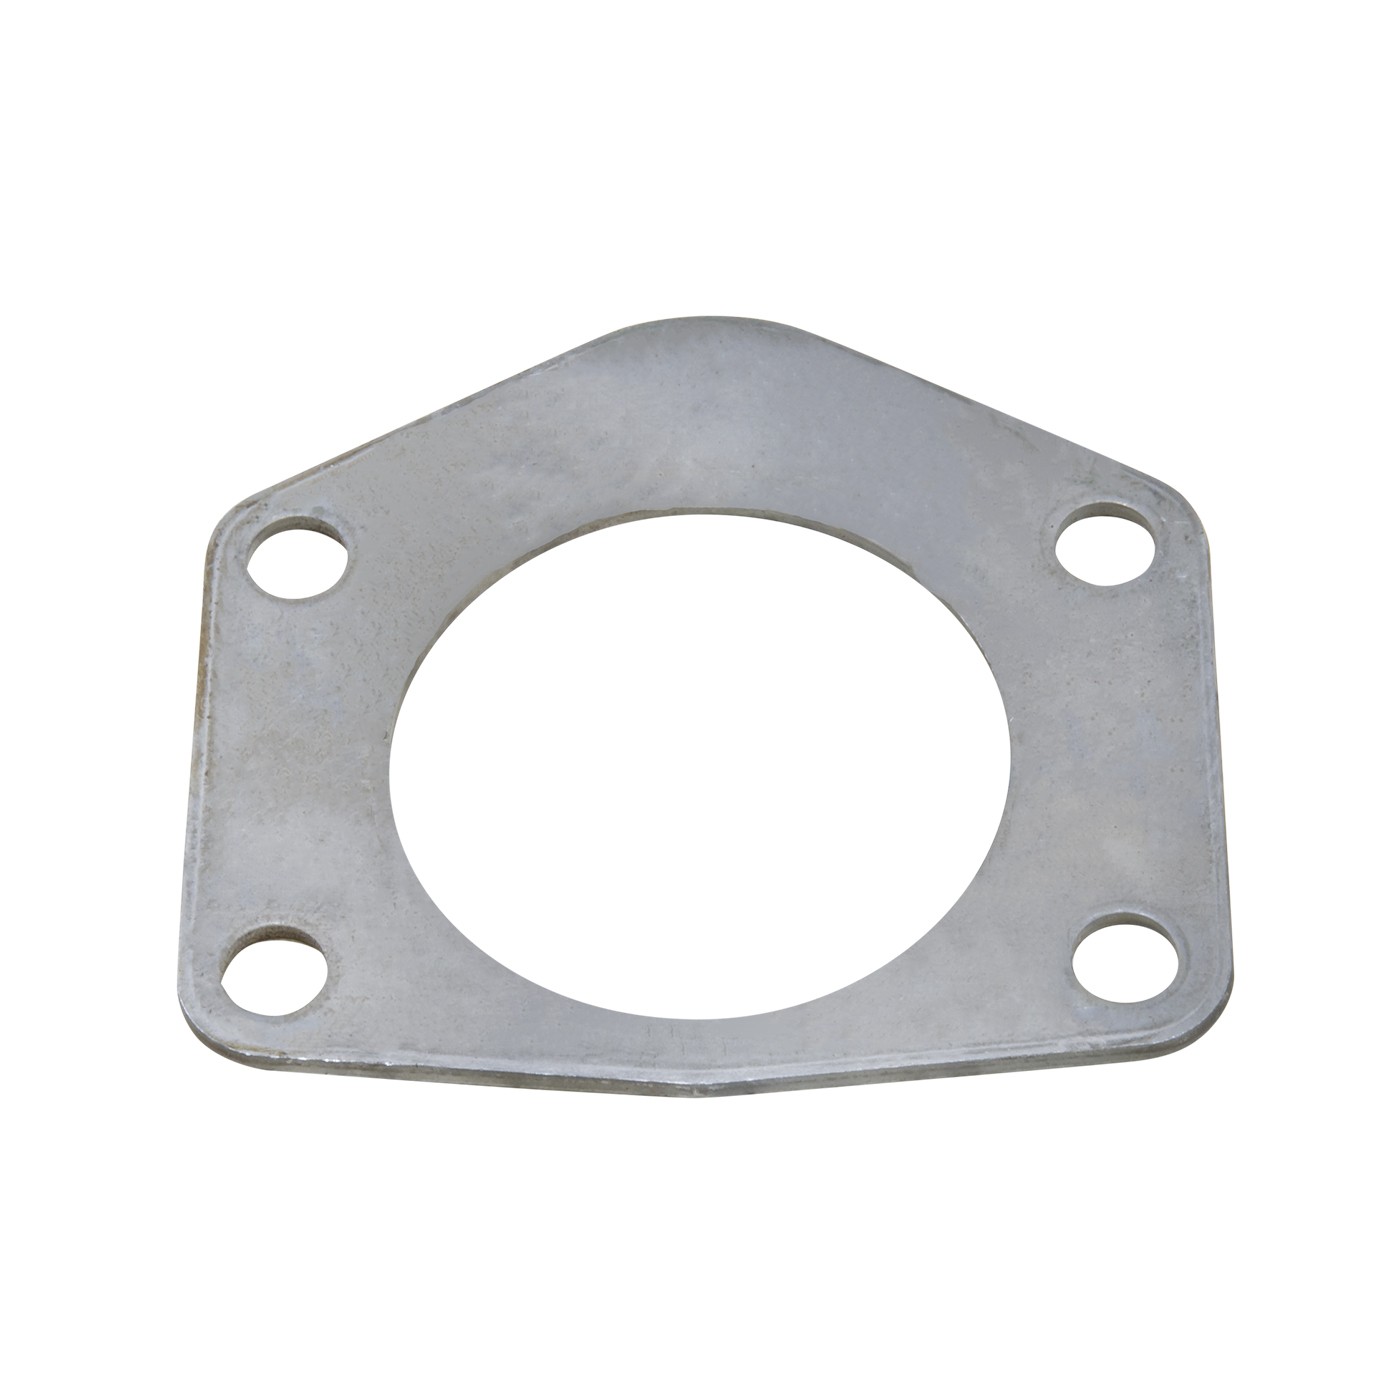 Axle bearing retainer plate for YA D75786-1X & YA D75786-2X 